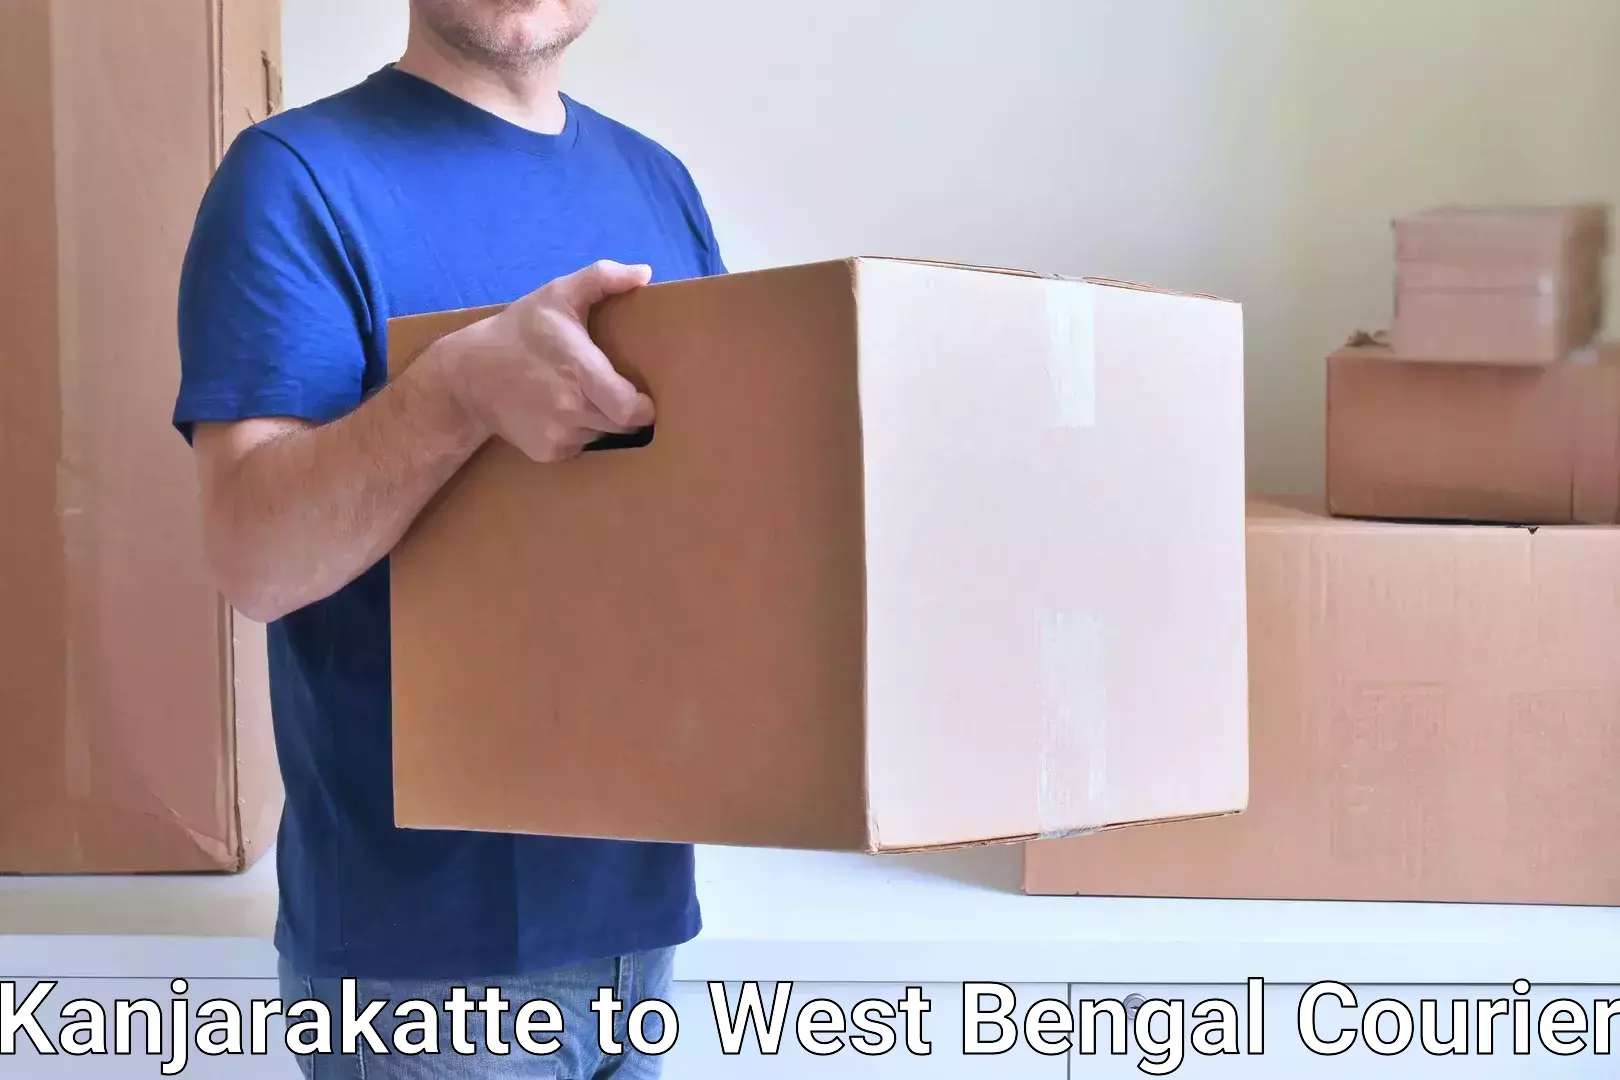 Urgent courier needs Kanjarakatte to West Bengal